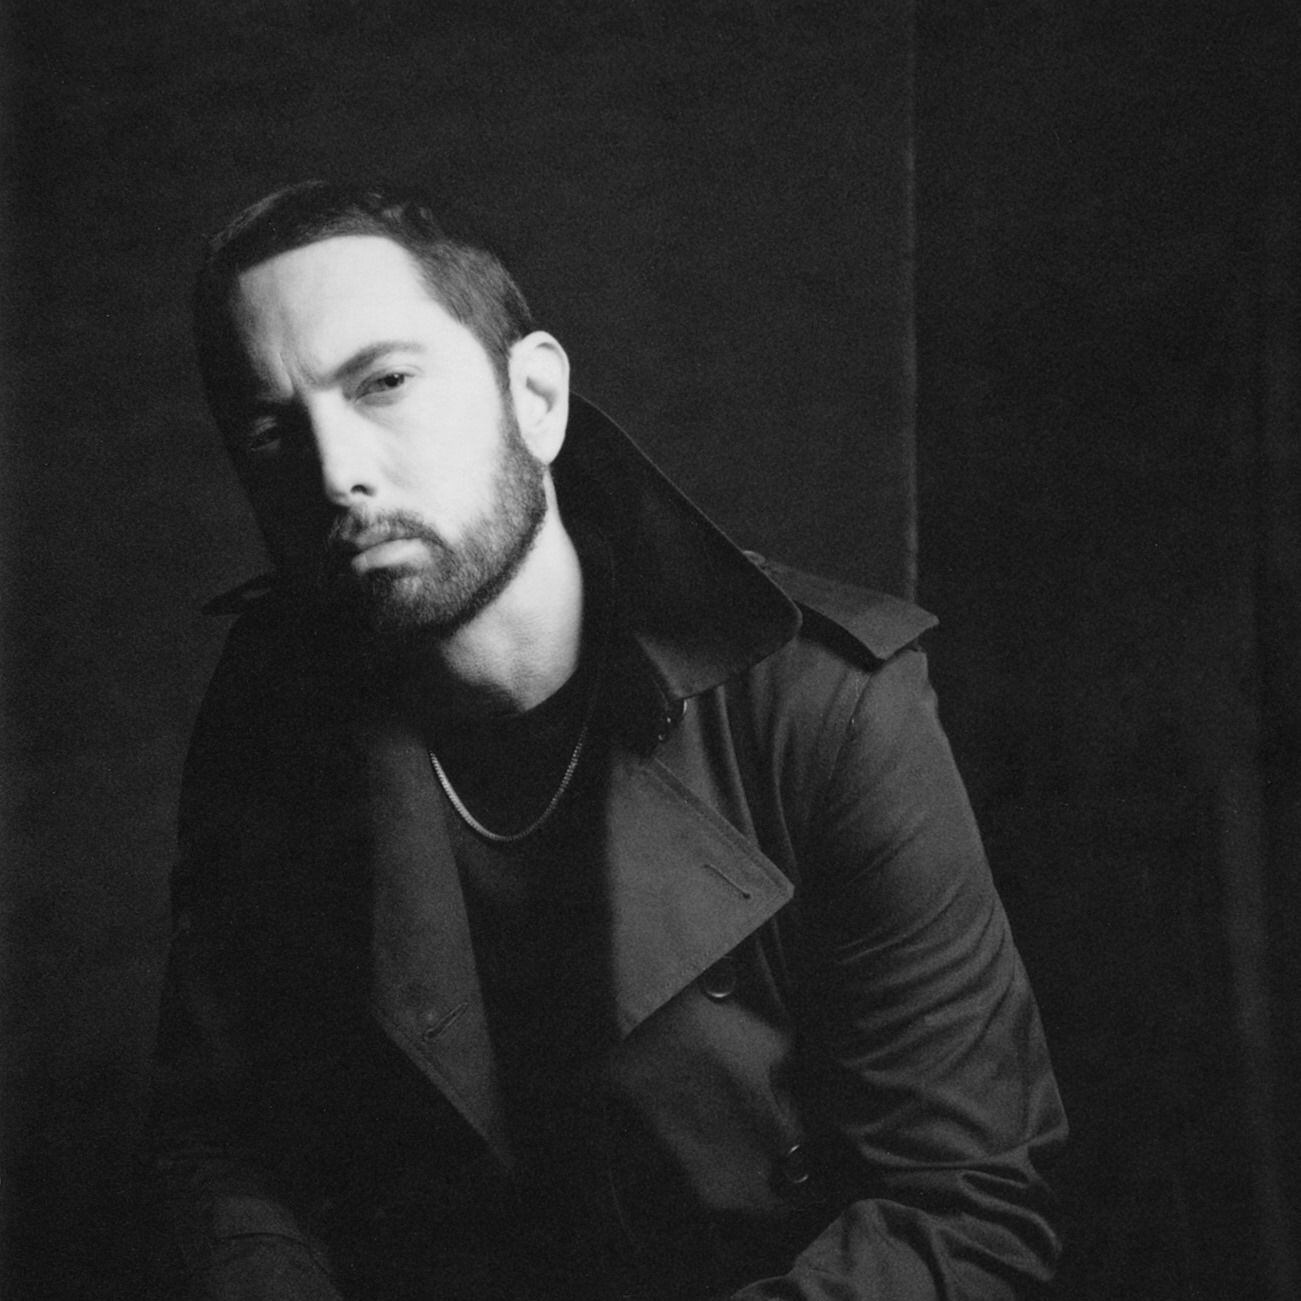 La carrera de Eminem inició en 1996 con su disco debut titulado 'Infinite', después llegó el éxito 'The Slim Shady LP'.